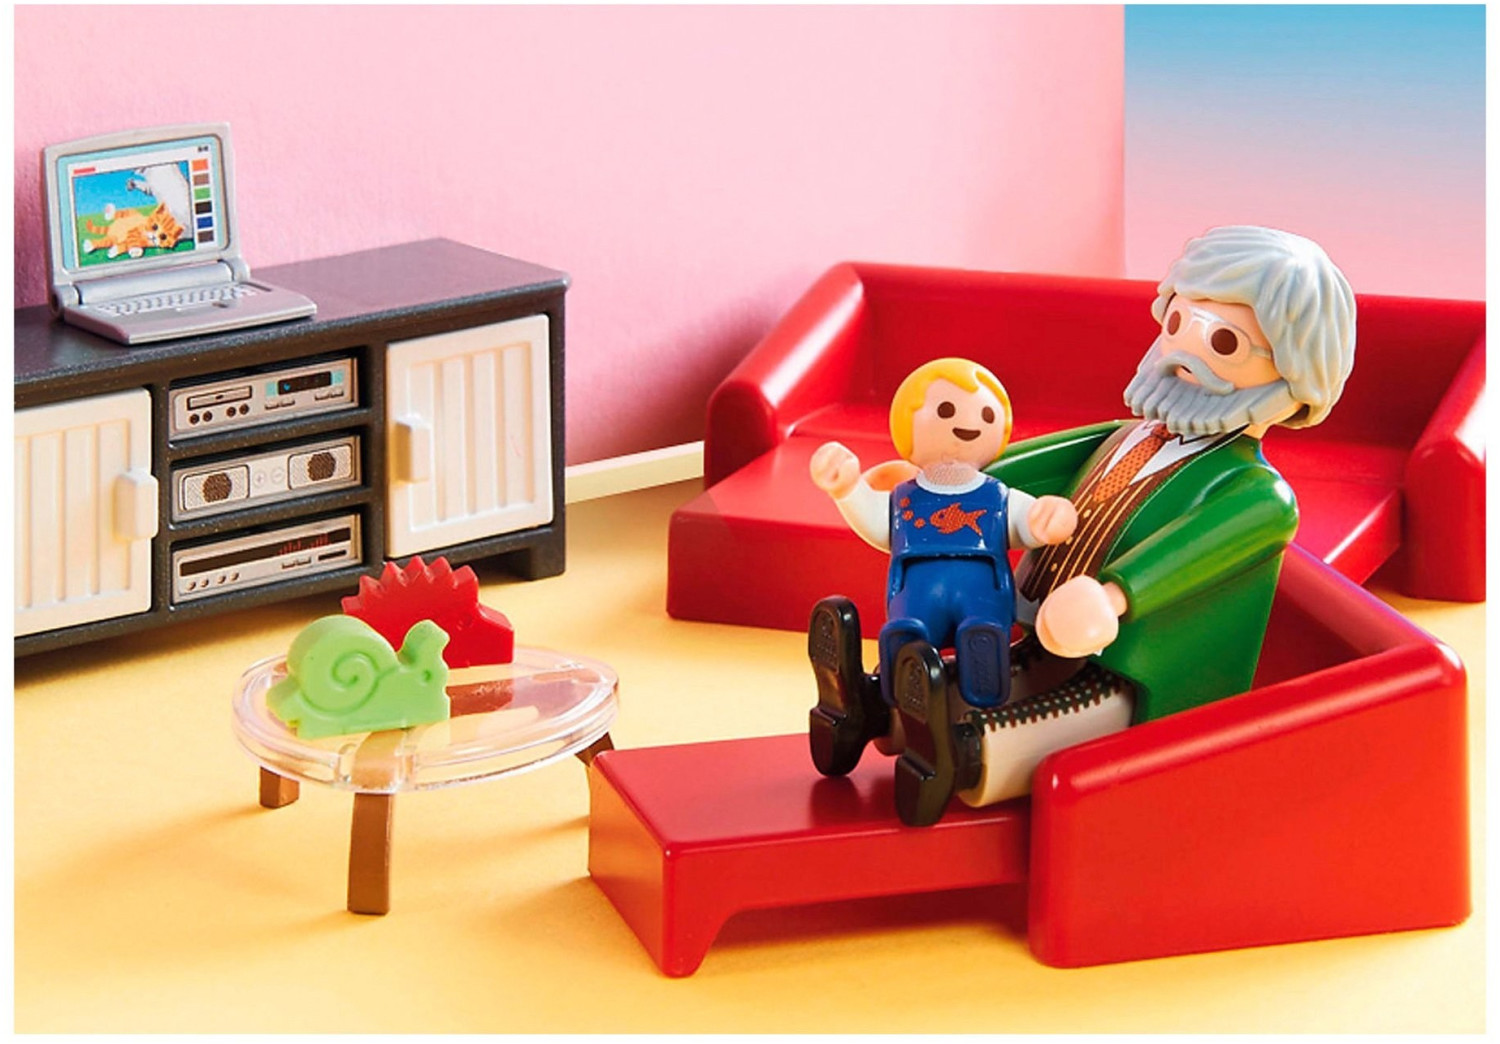 Playmobil - Cuisine Aménagée+Grande Maison Traditionnelle- Dollhouse